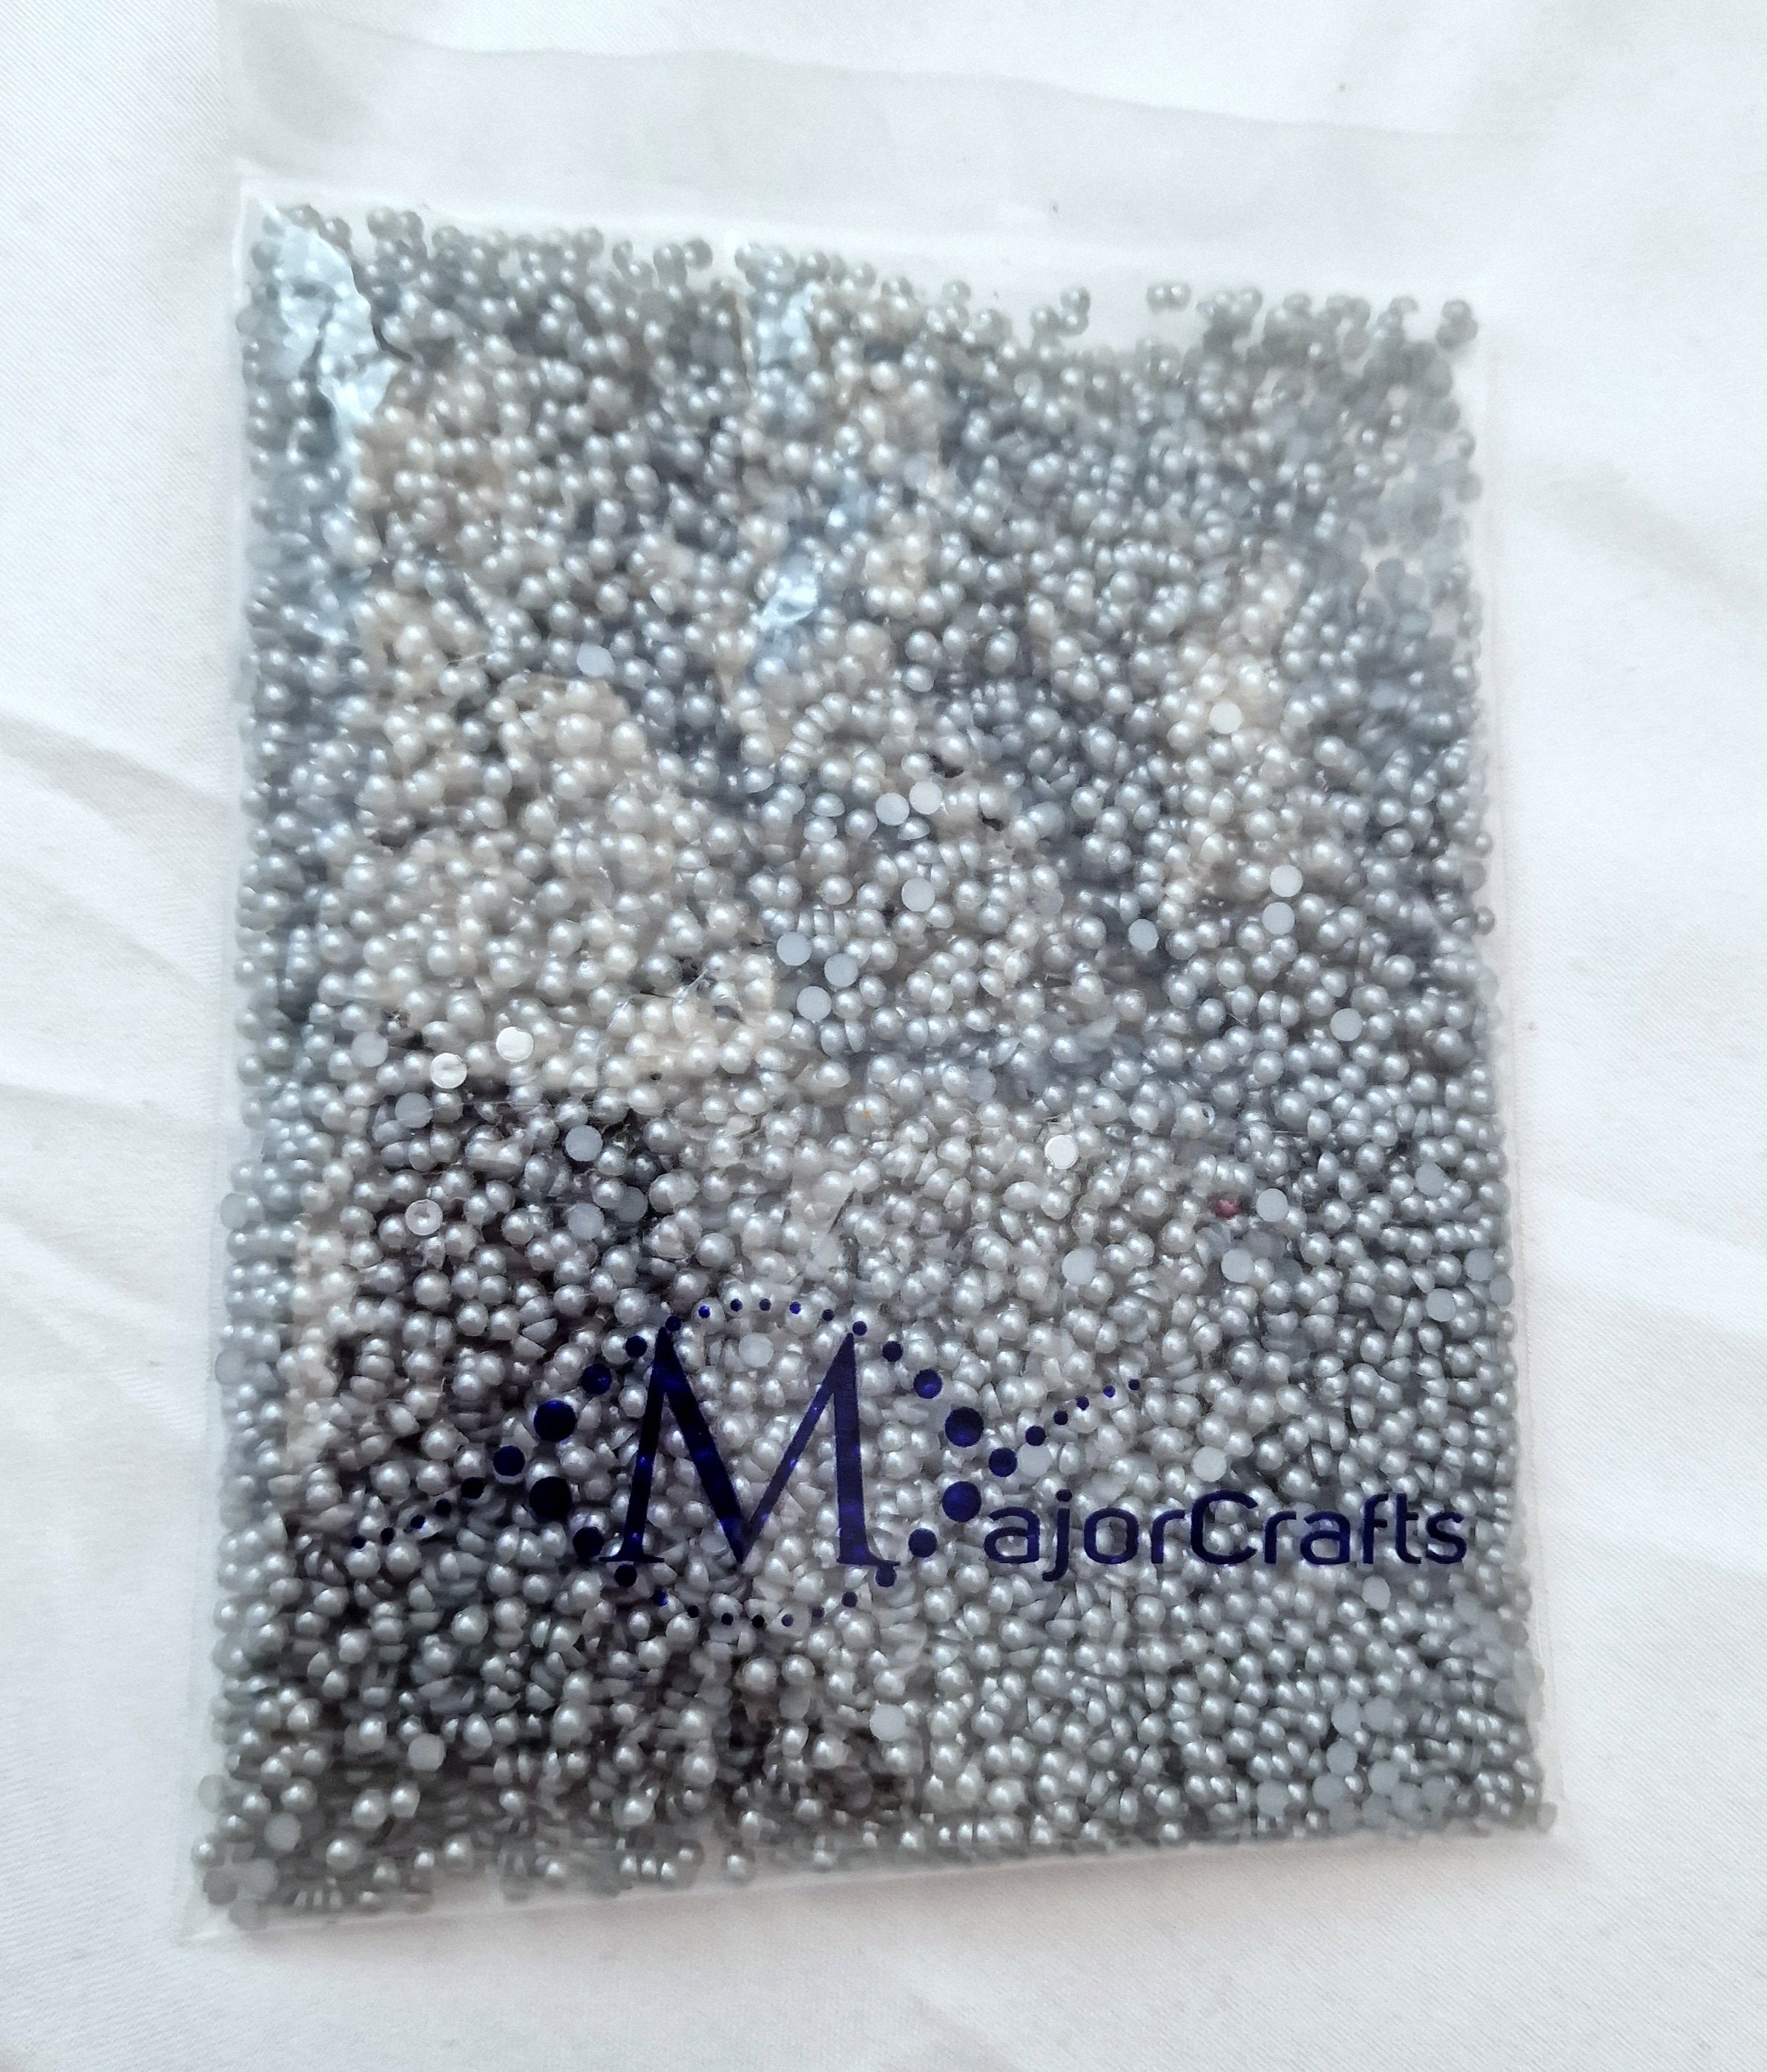 MajorCrafts Dark Grey Flat Back Half Round Resin Embellishment Pearls C19